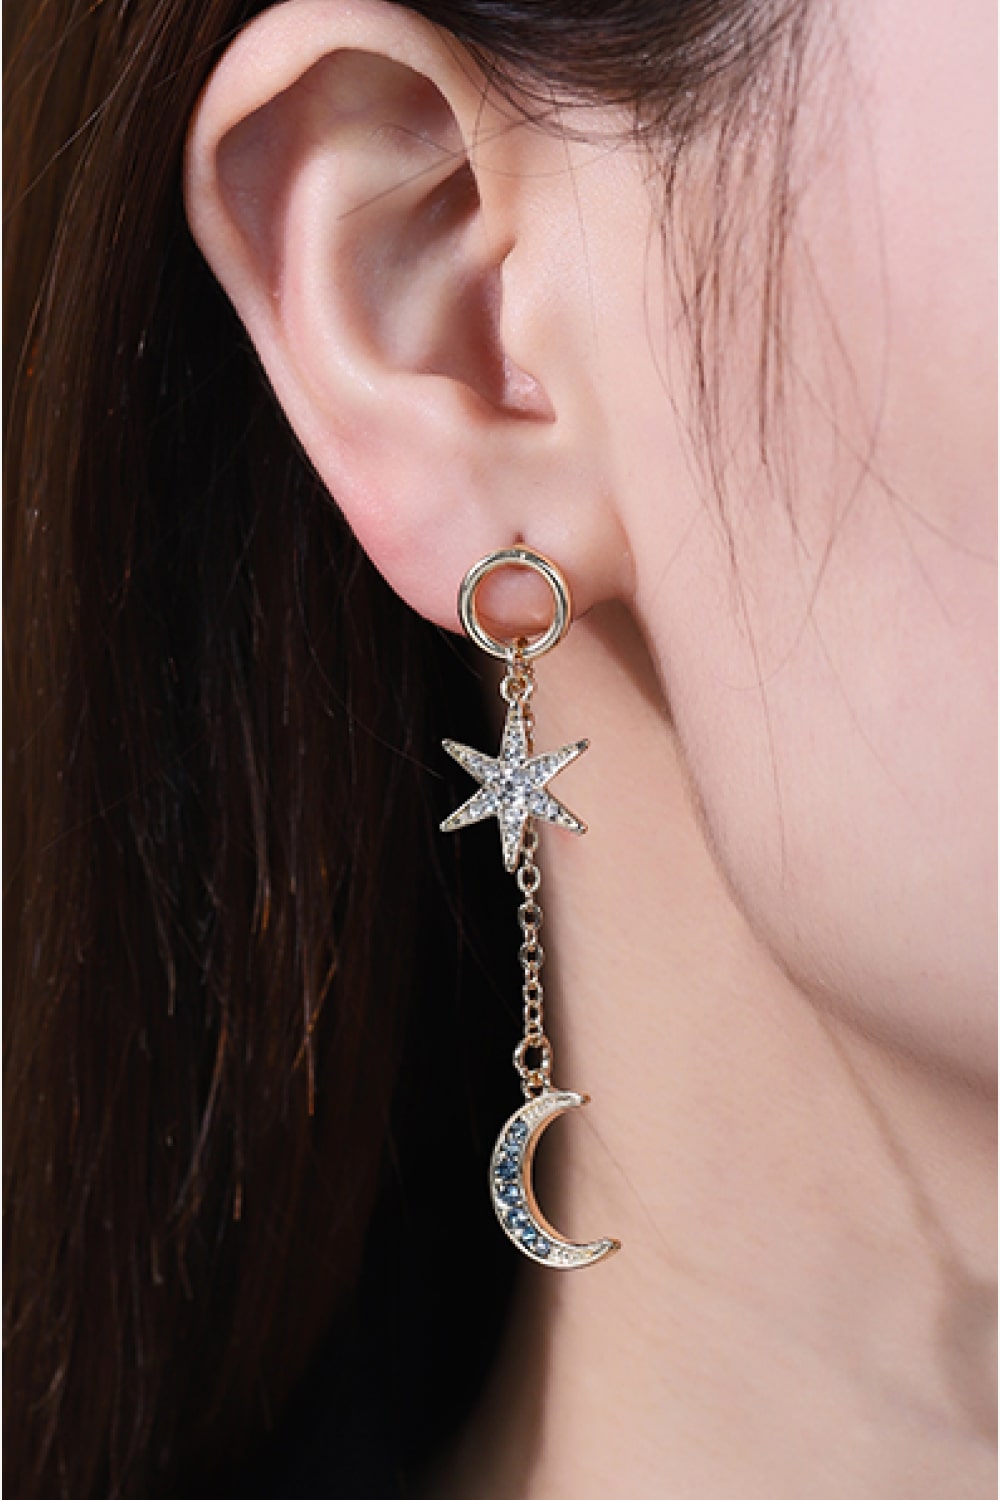 Rhinestone Star and Moon Drop Earrings